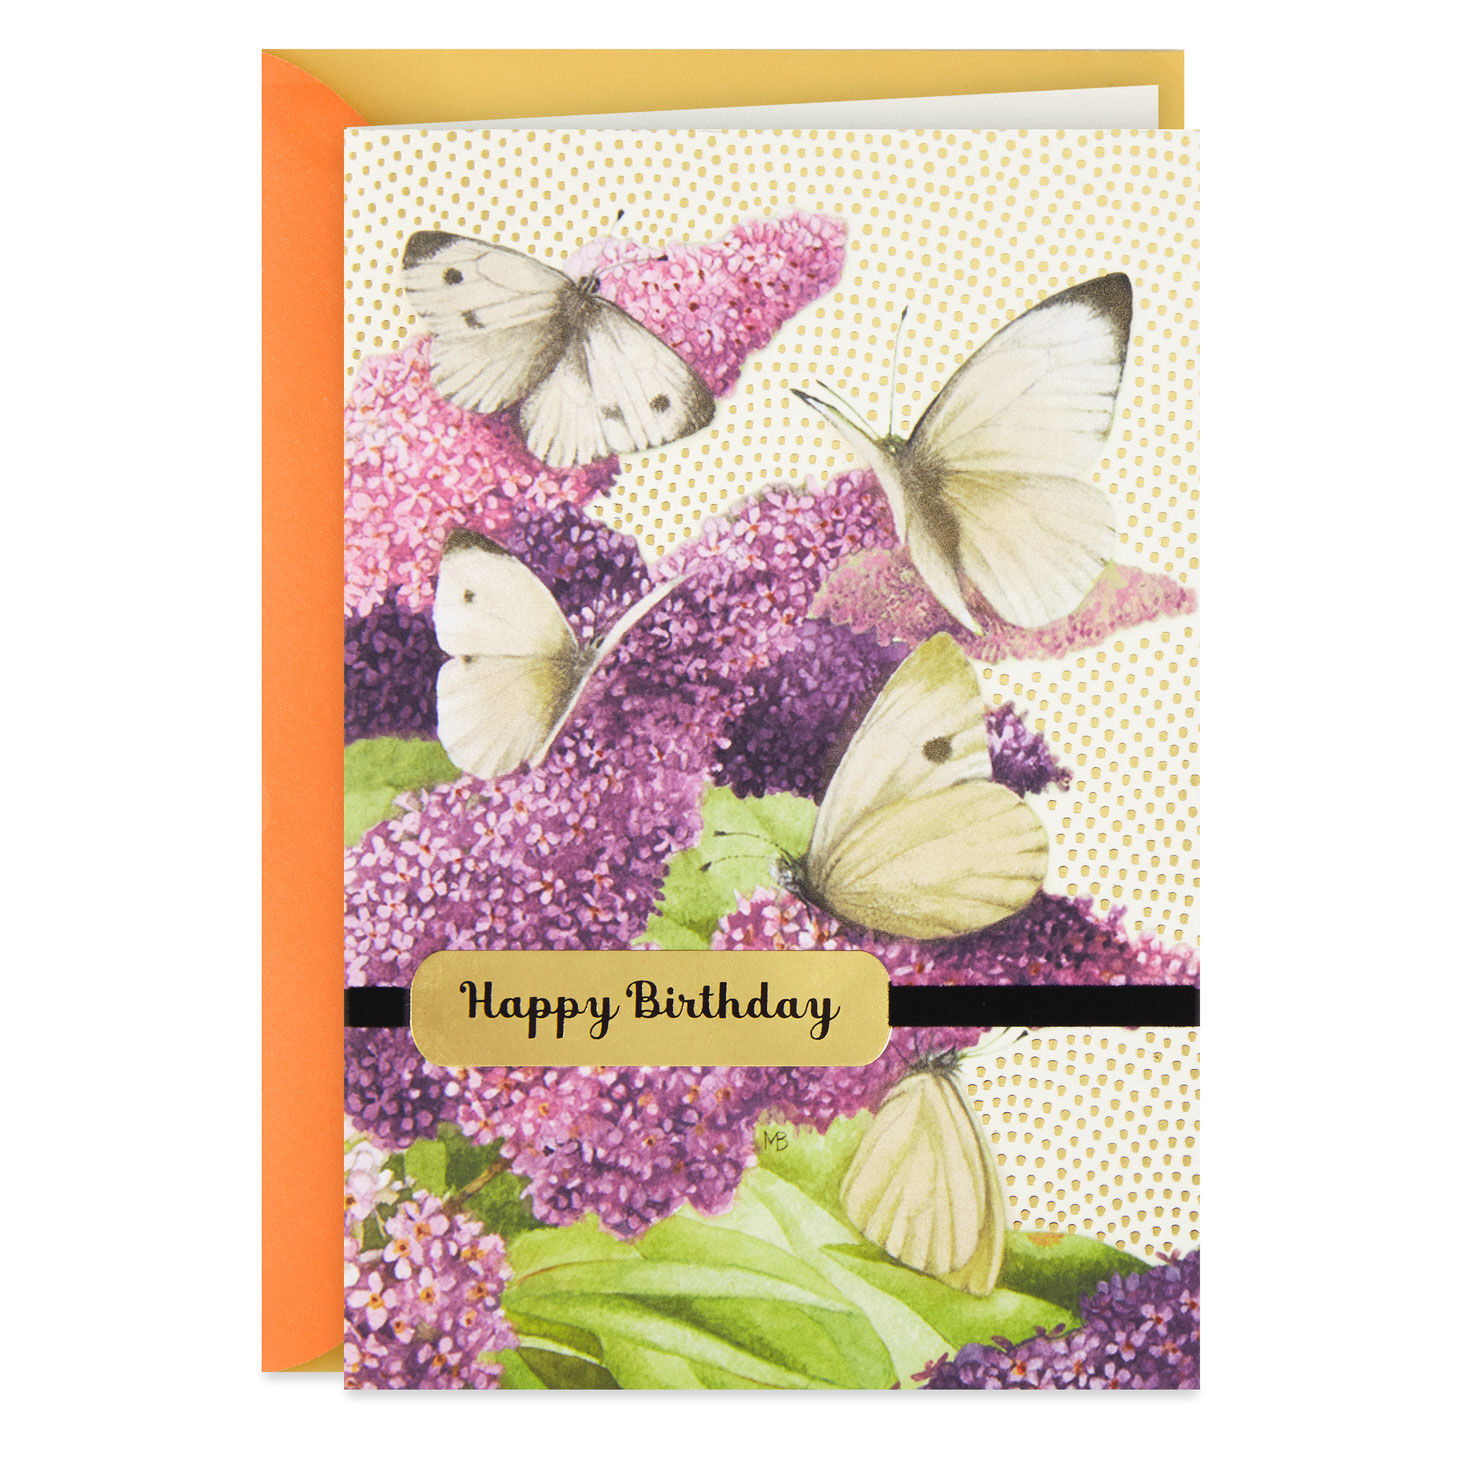 Happy Birthday To A Perennial Friend By Marjolein Bastin Hallmark Card 